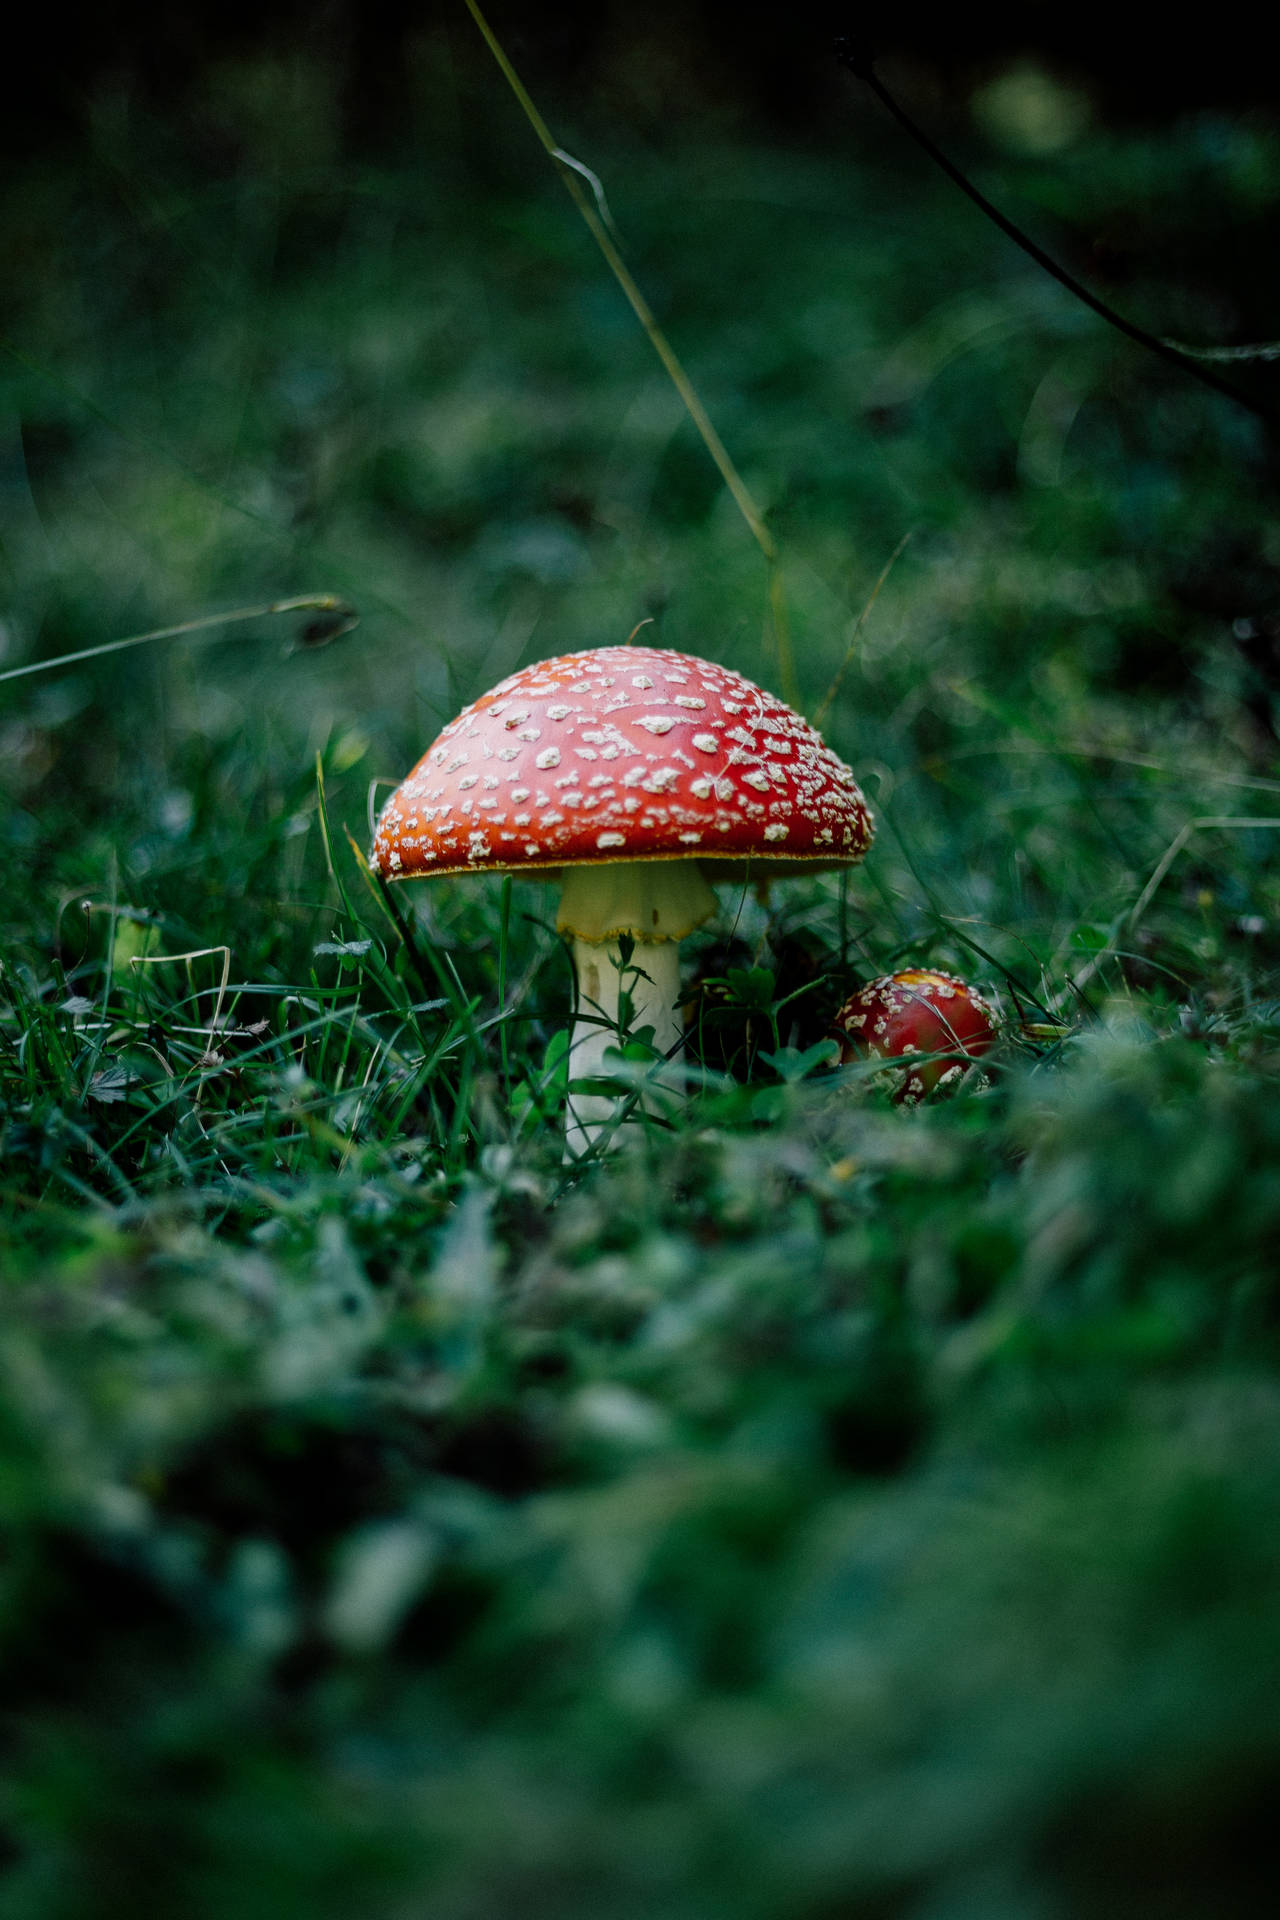 Cute Red Mushrooms On Lush Grass